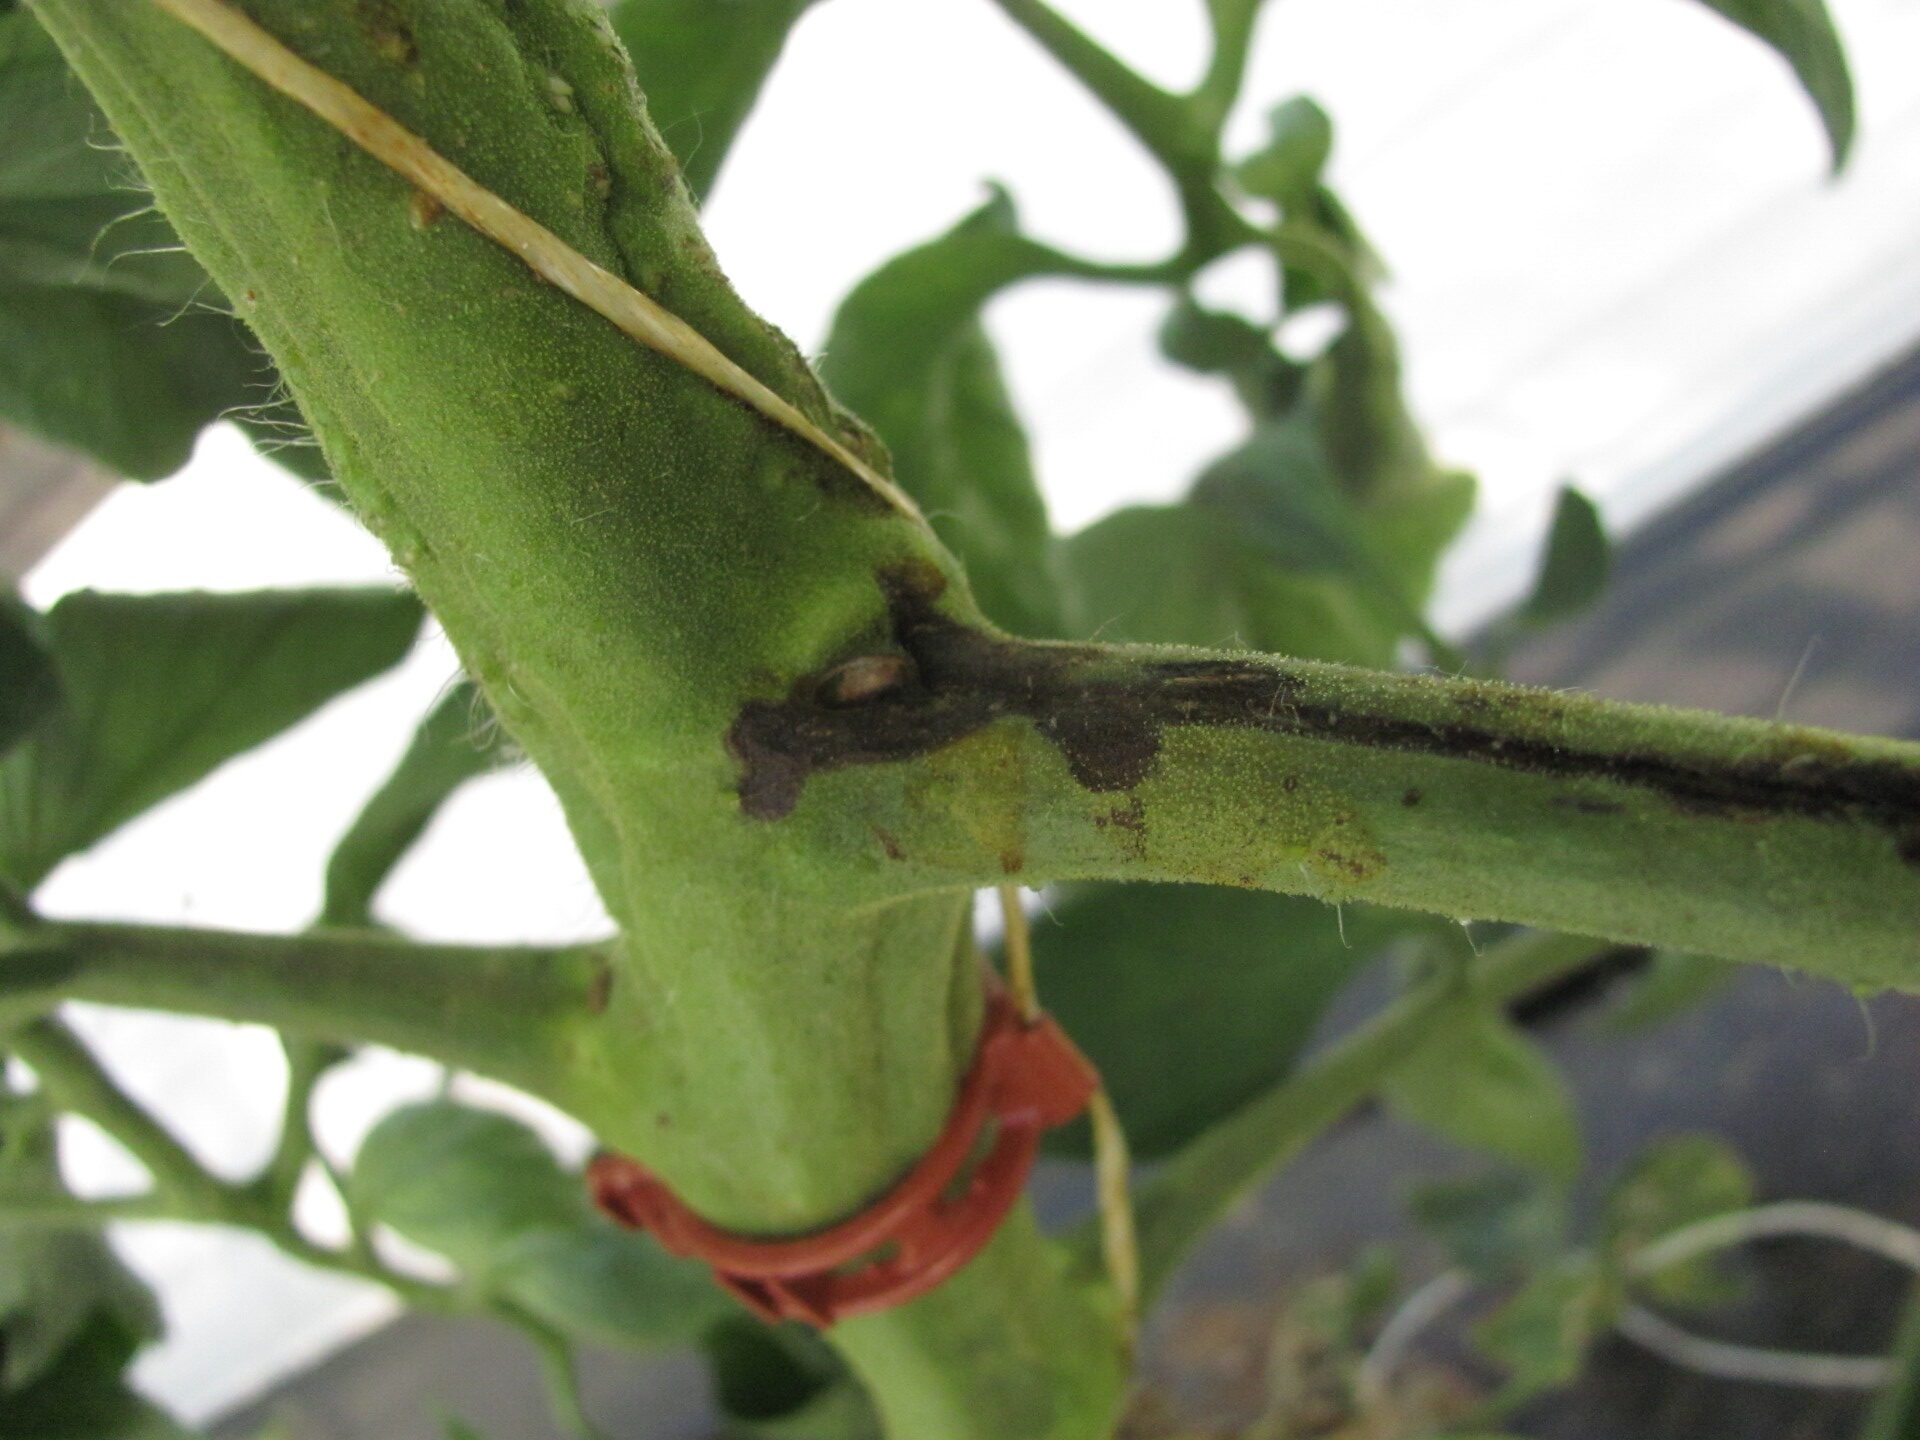 Dark pith necrosis lesion on tomato stem.